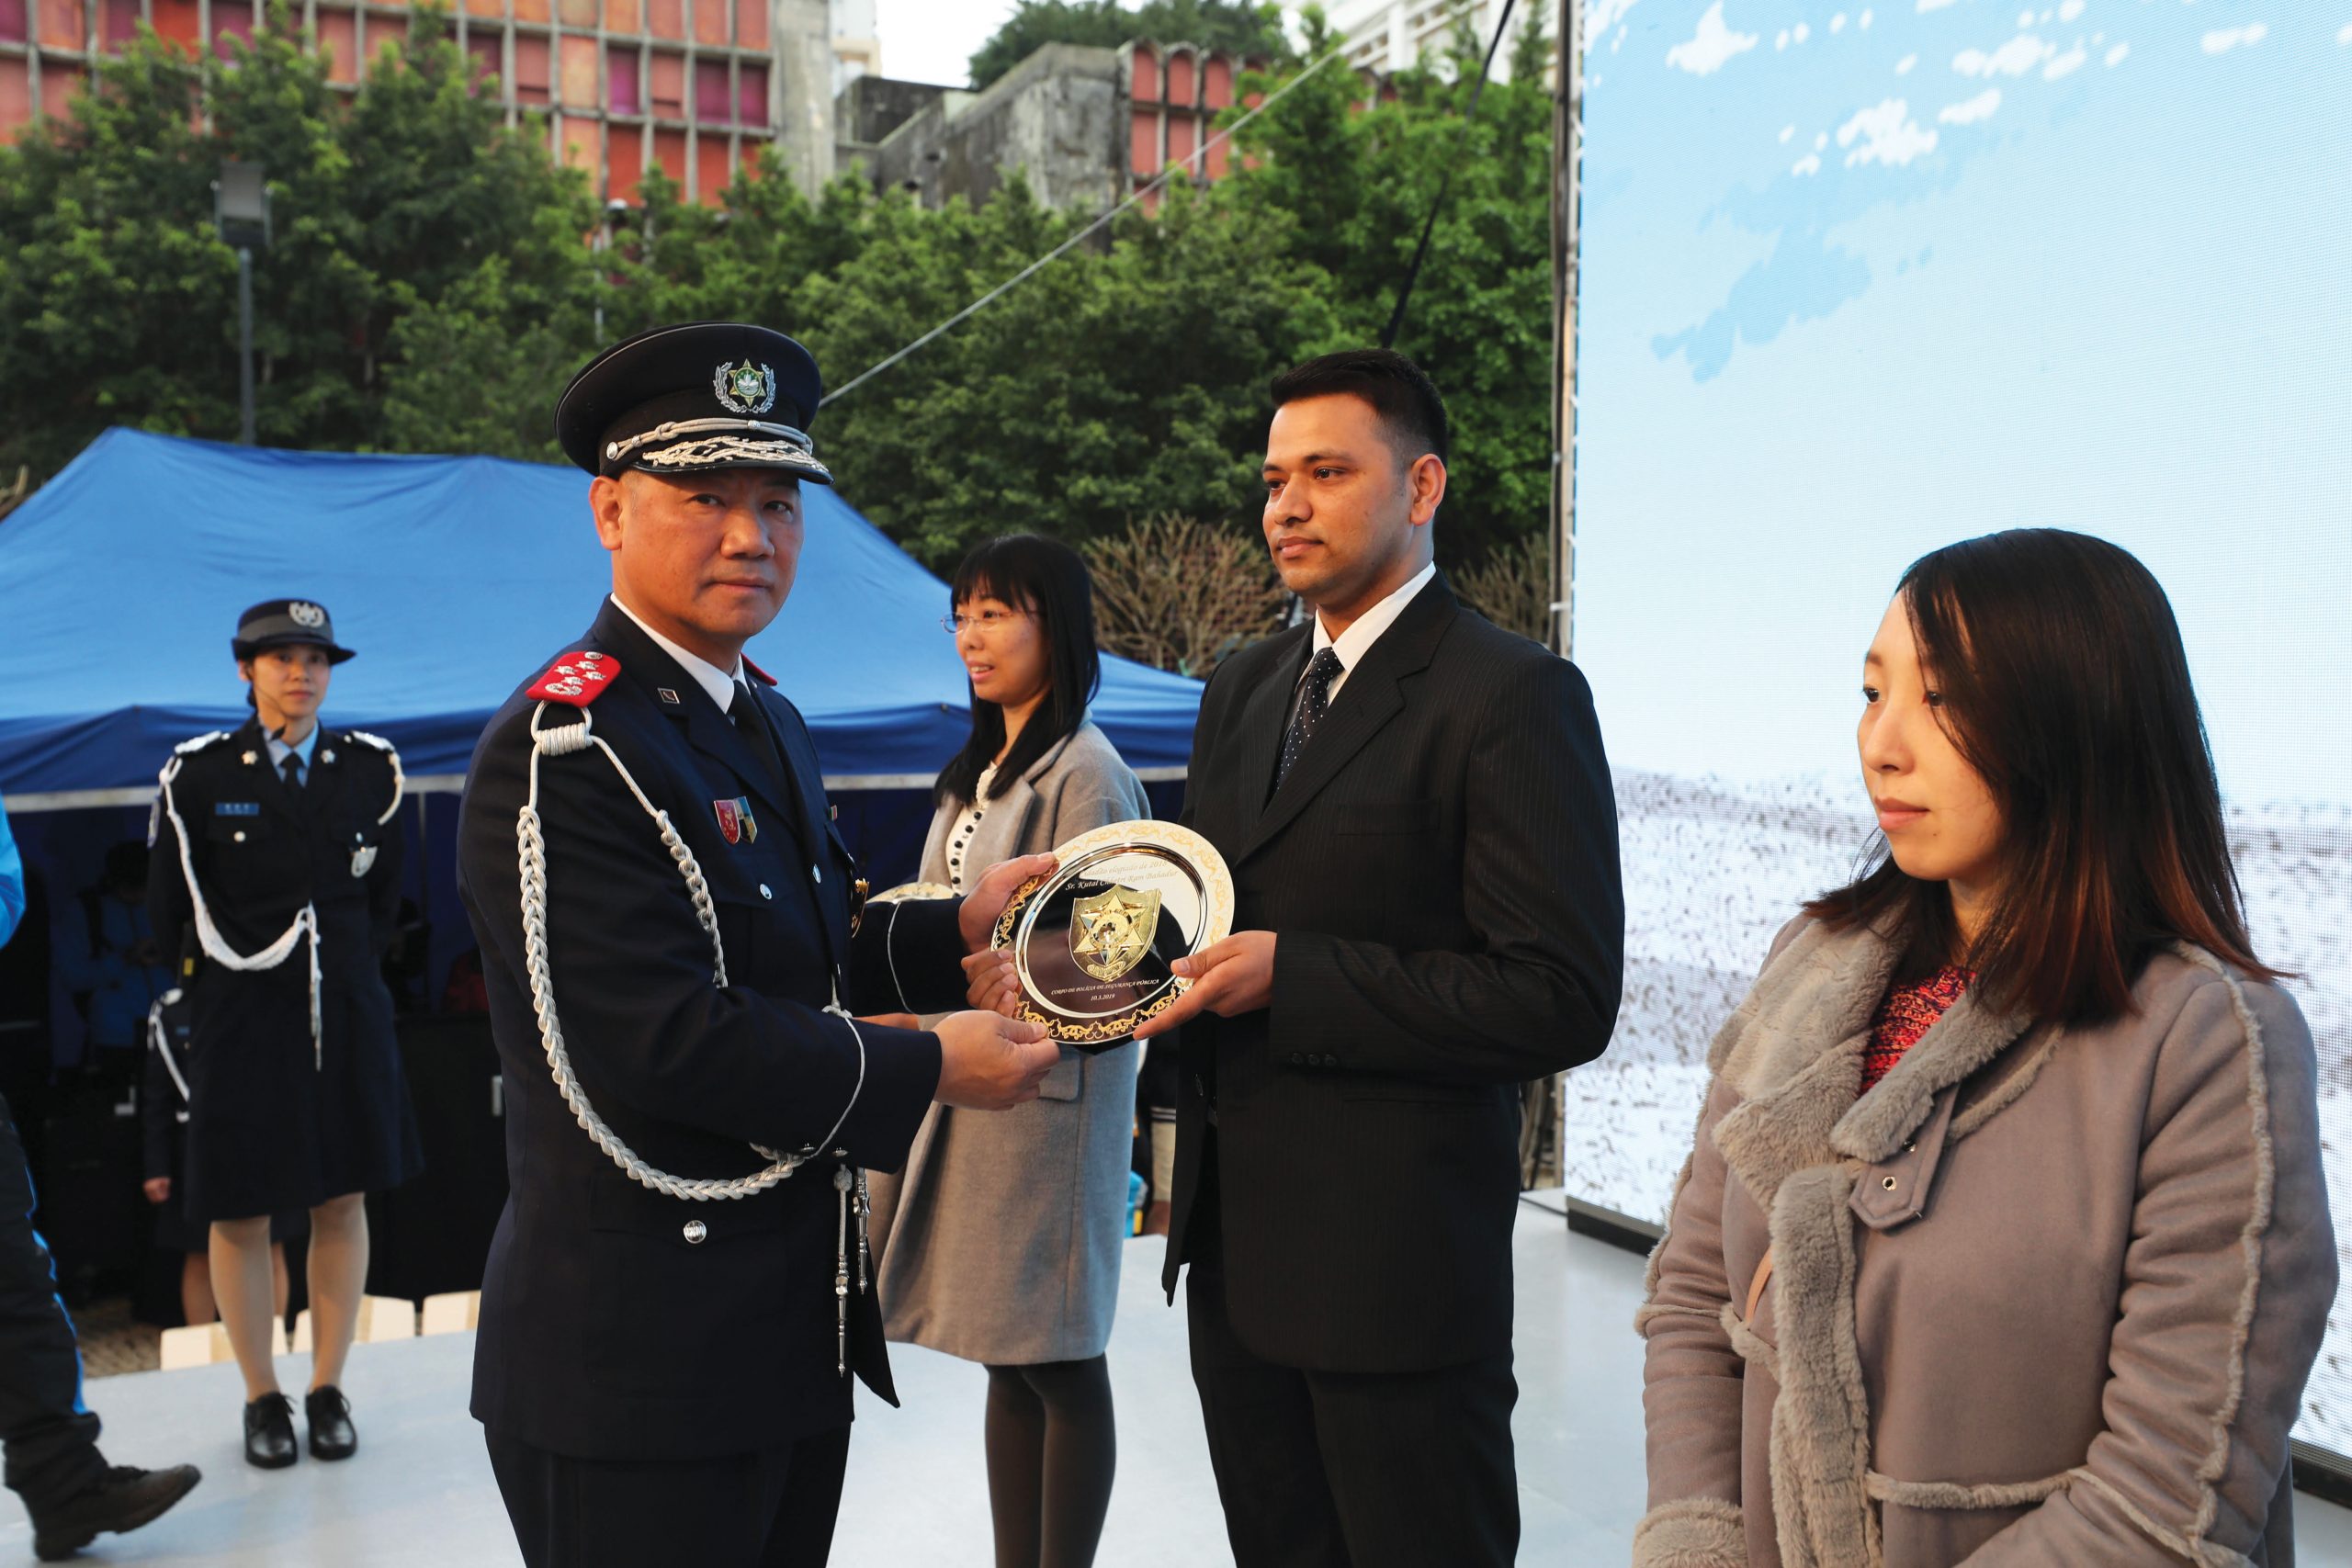 Chhetri receiving his award | Photo Courtesy of Wynn Macau